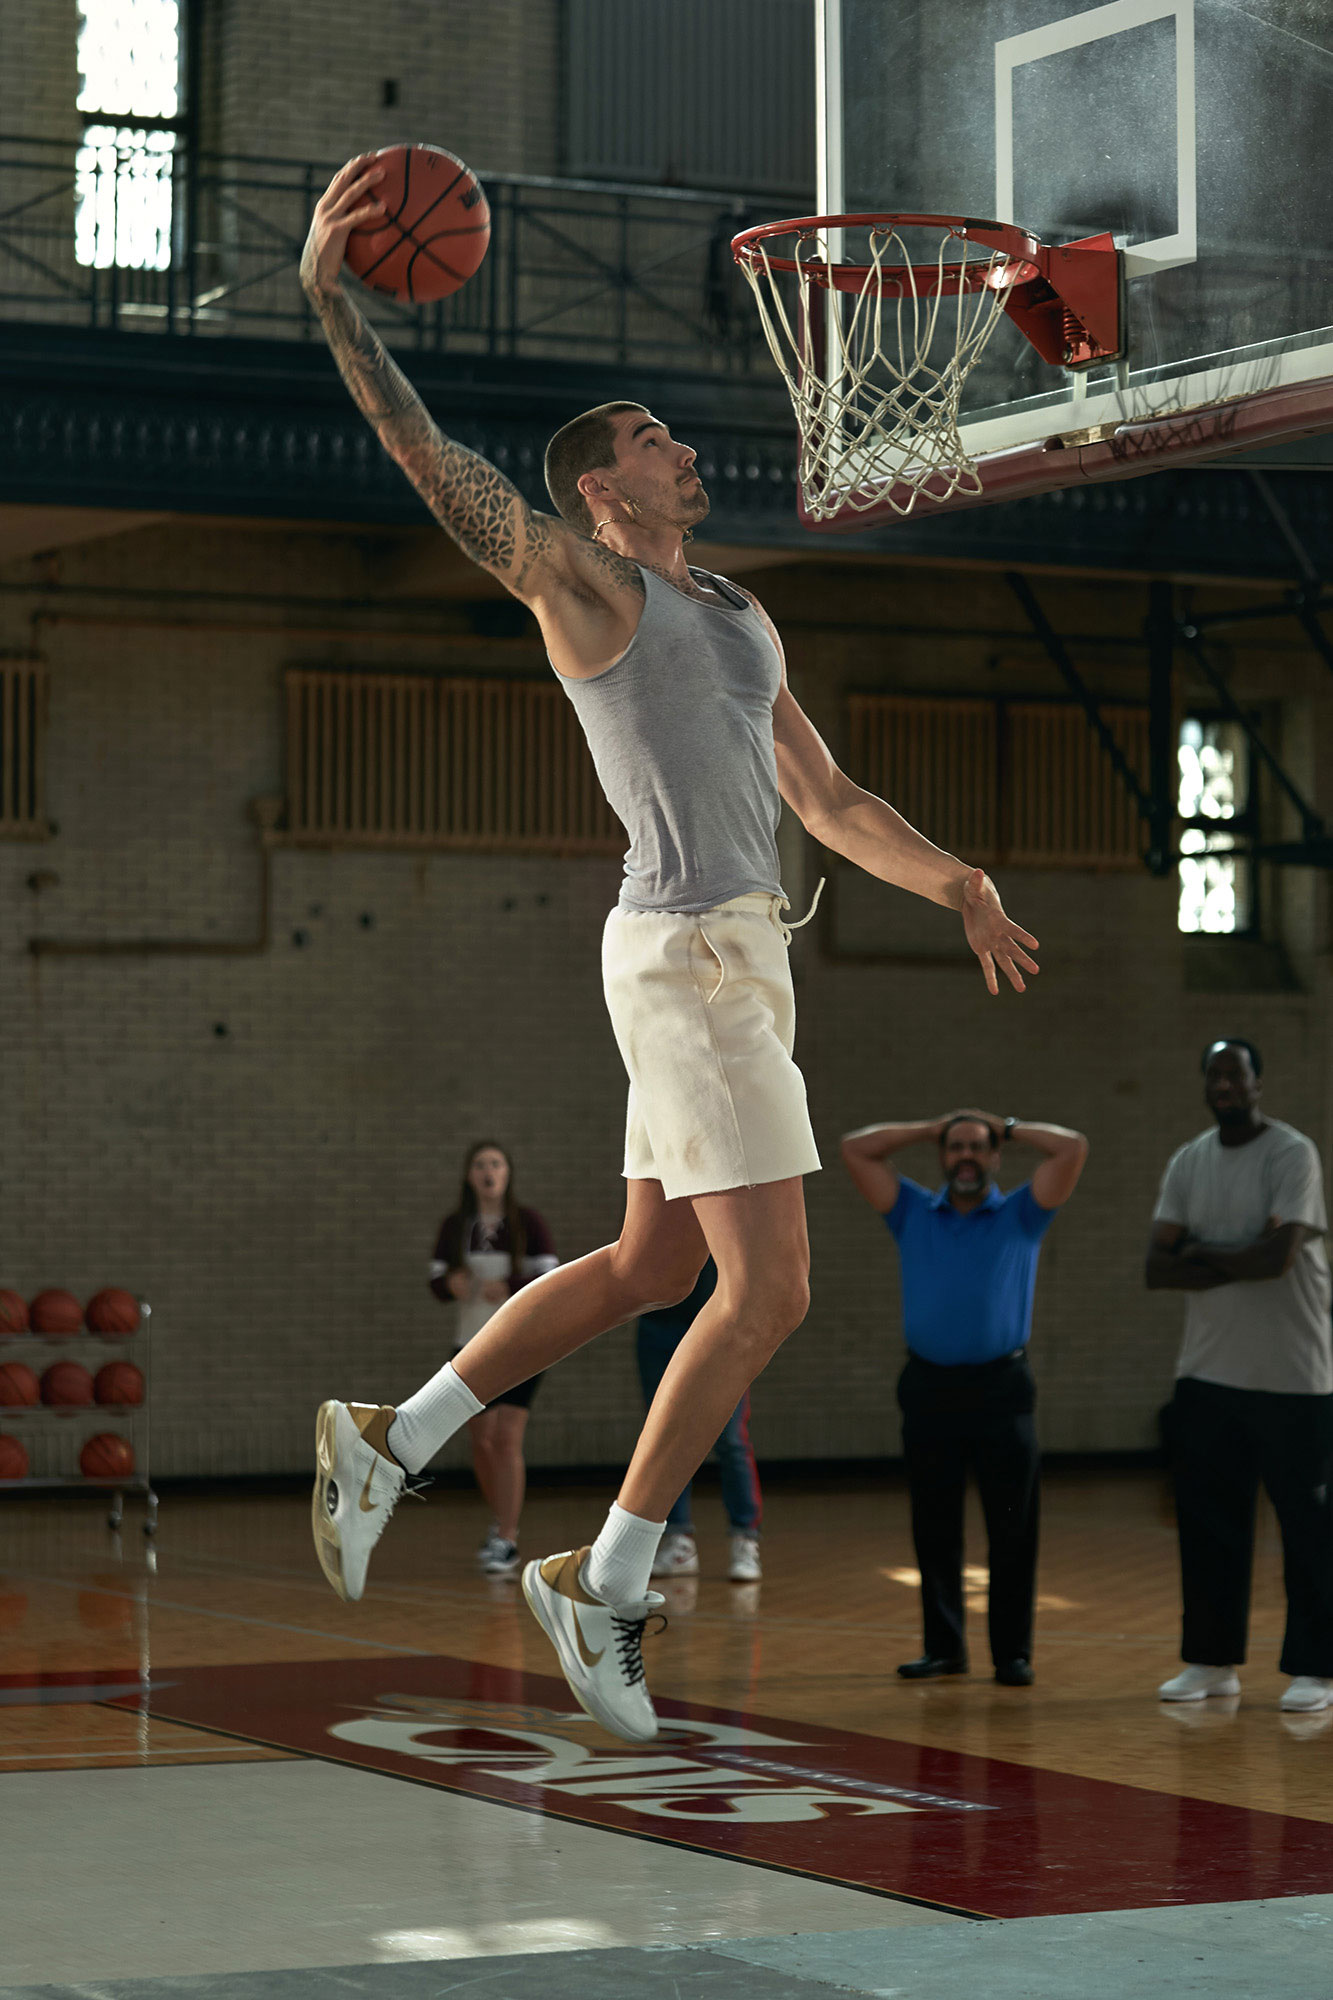 Hustle,” Reviewed: Adam Sandler's Love Letter to Basketball